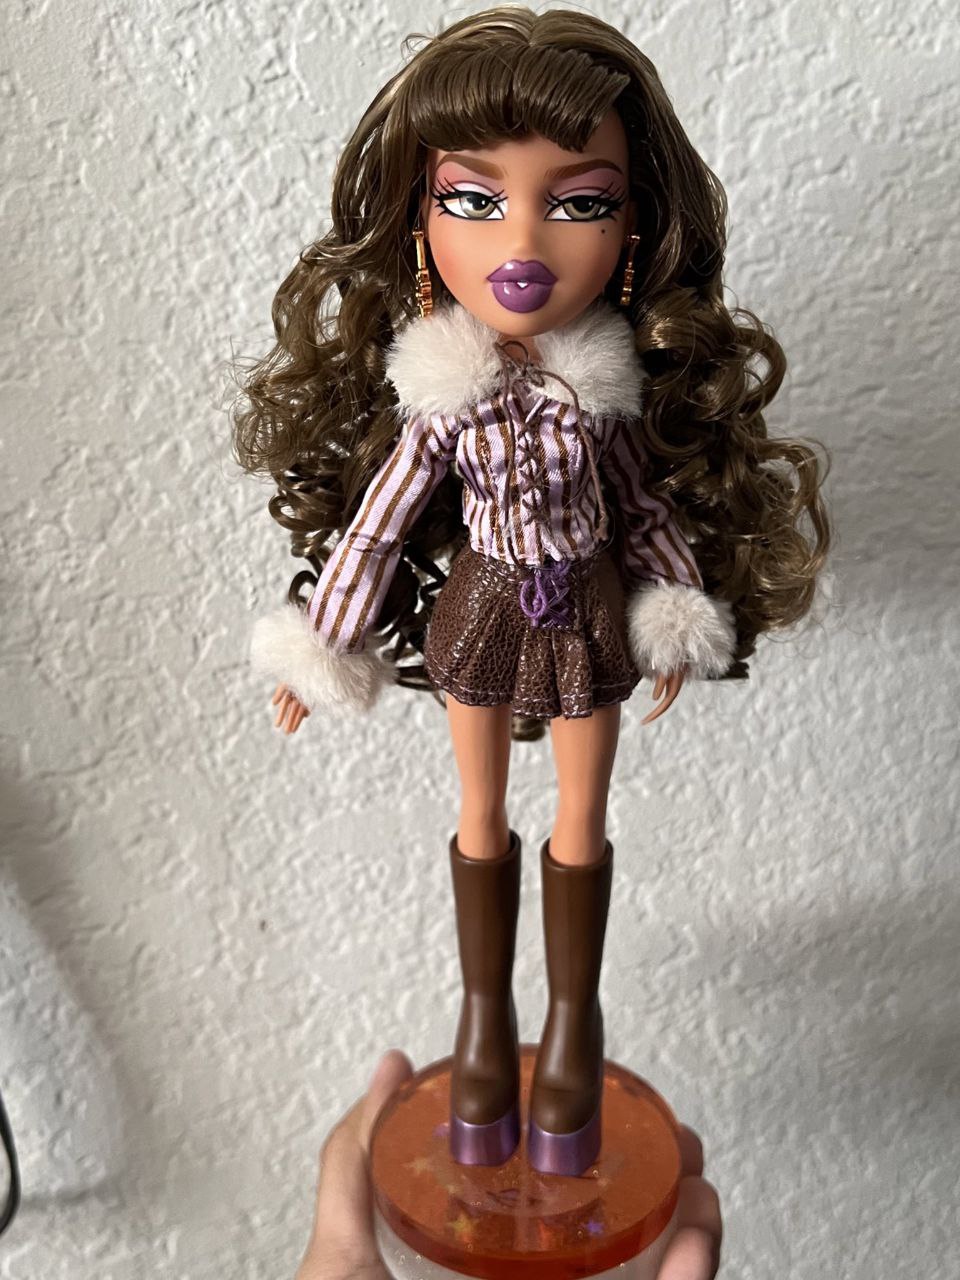 I bought a always bratz yasmine doll on LolSuprise.com when it